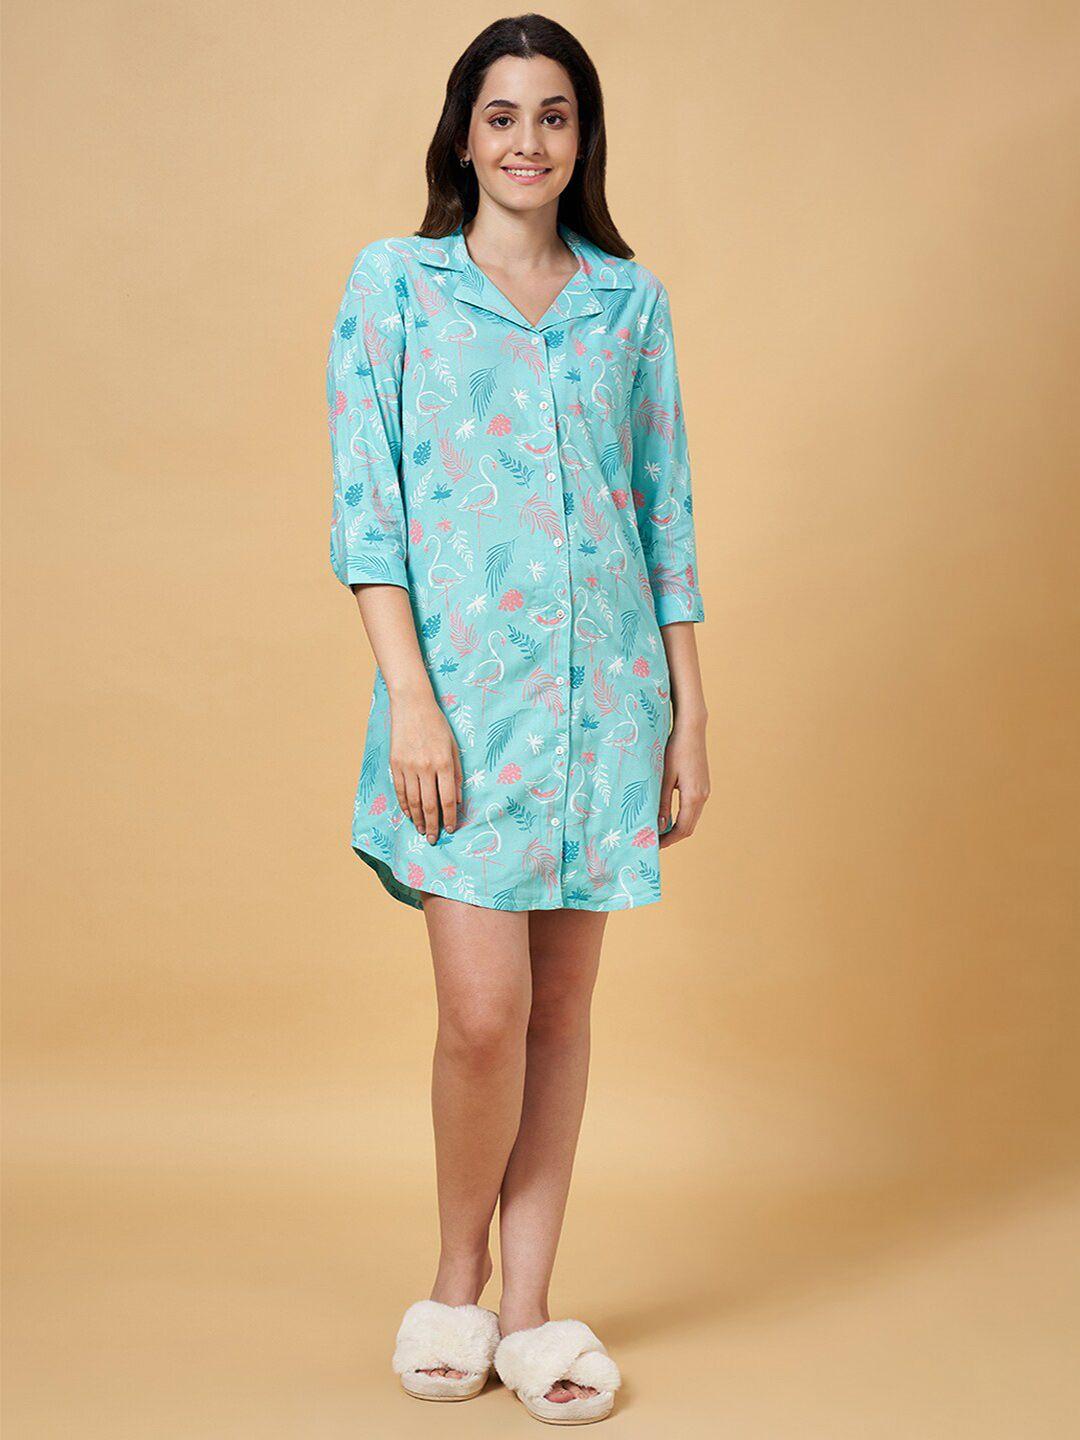 dreamz by pantaloons floral printed shirt nightdress